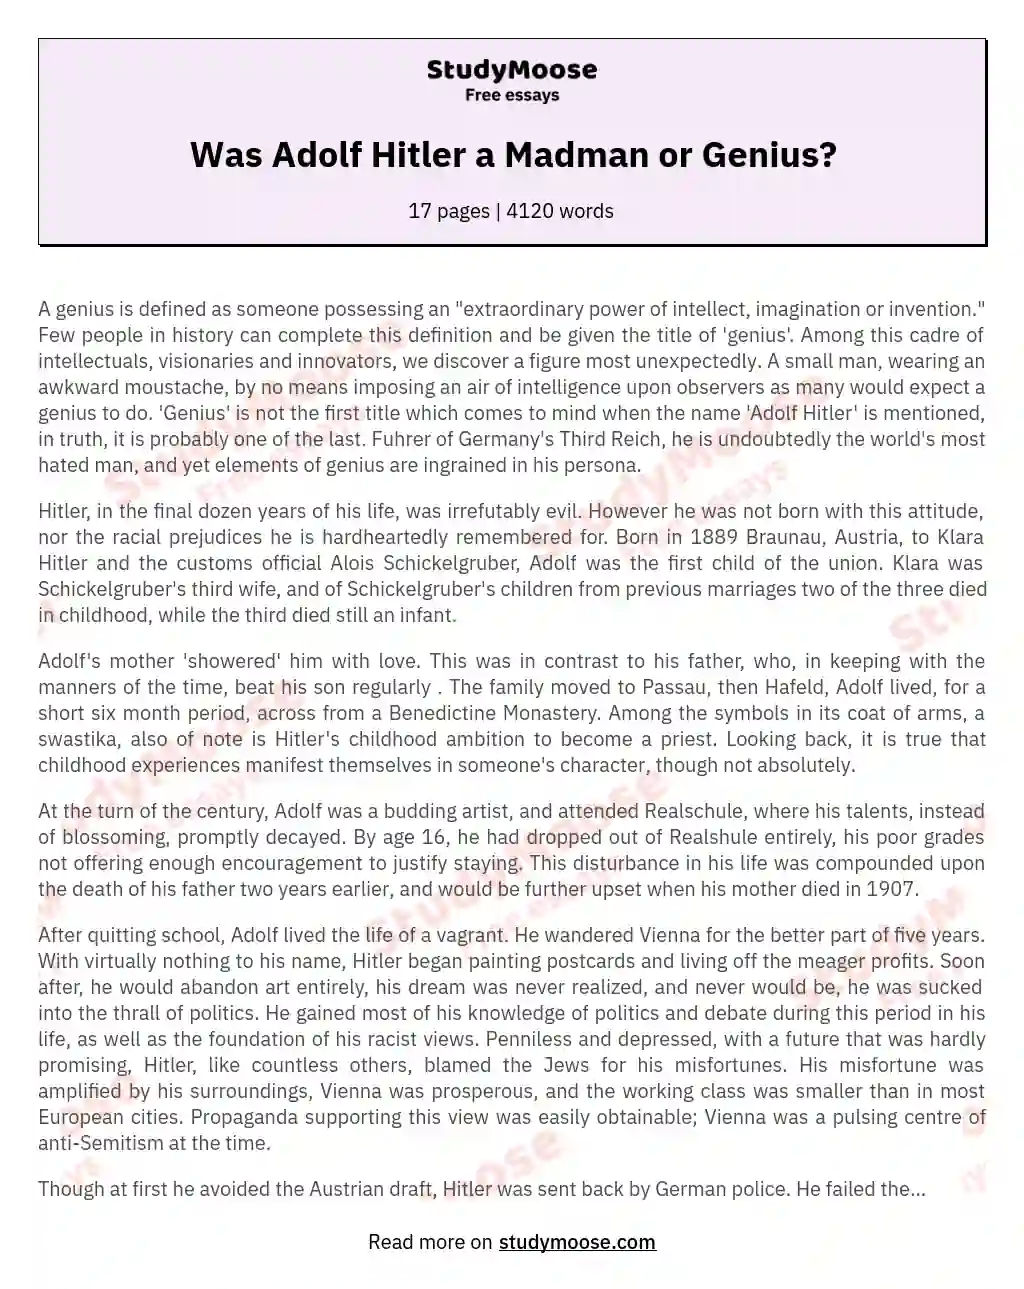 Was Adolf Hitler a Madman or Genius?